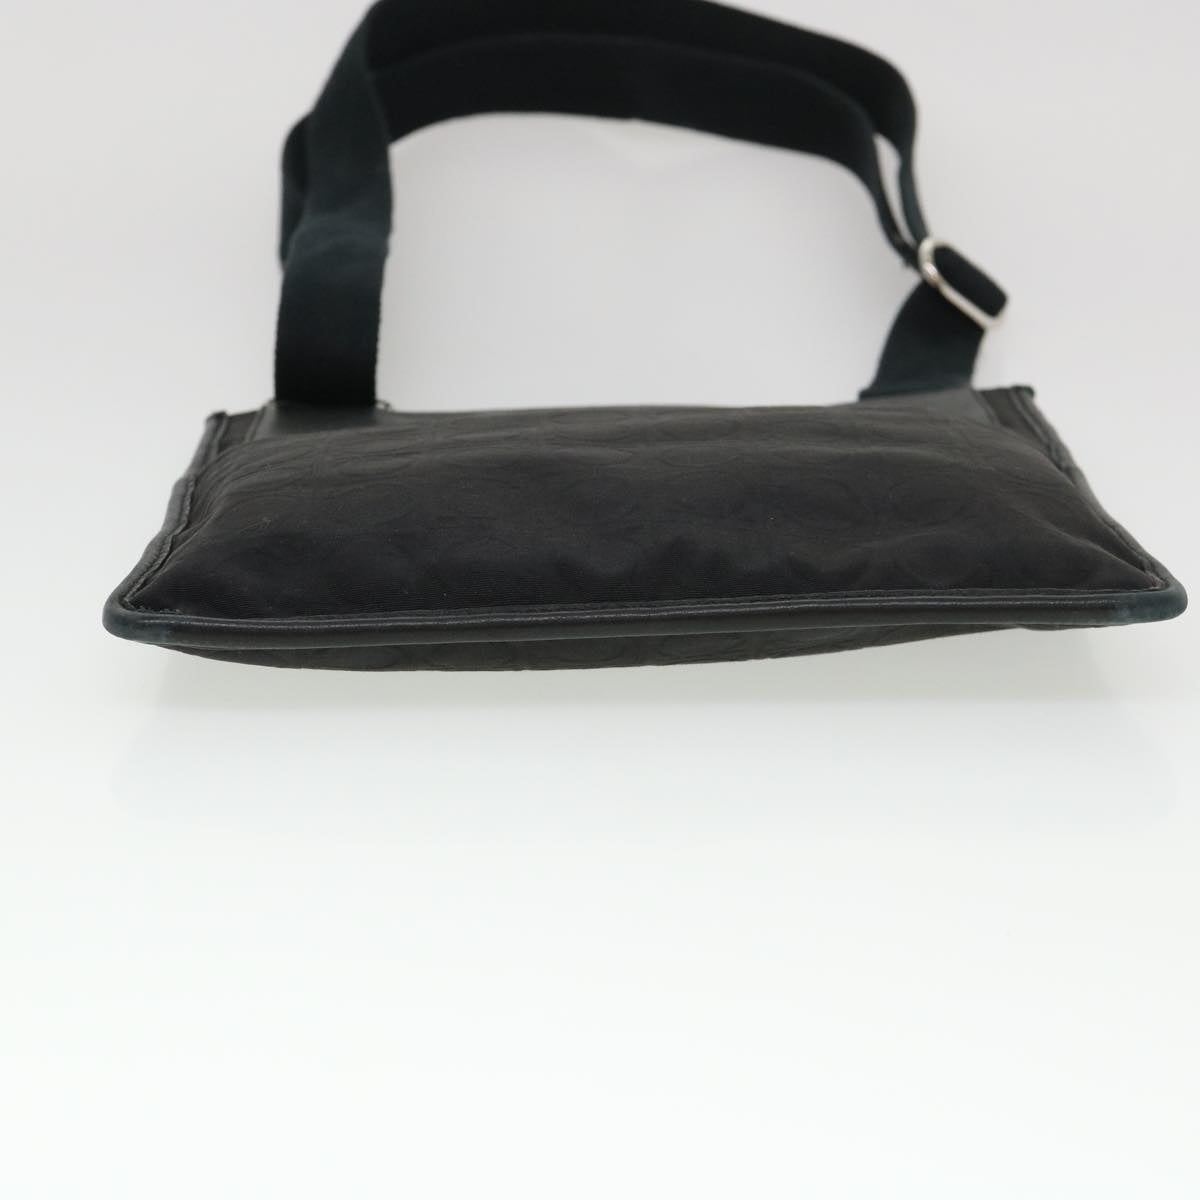 Salvatore Ferragamo Shoulder Bag Nylon Black AU-21/4933 Auth cl452